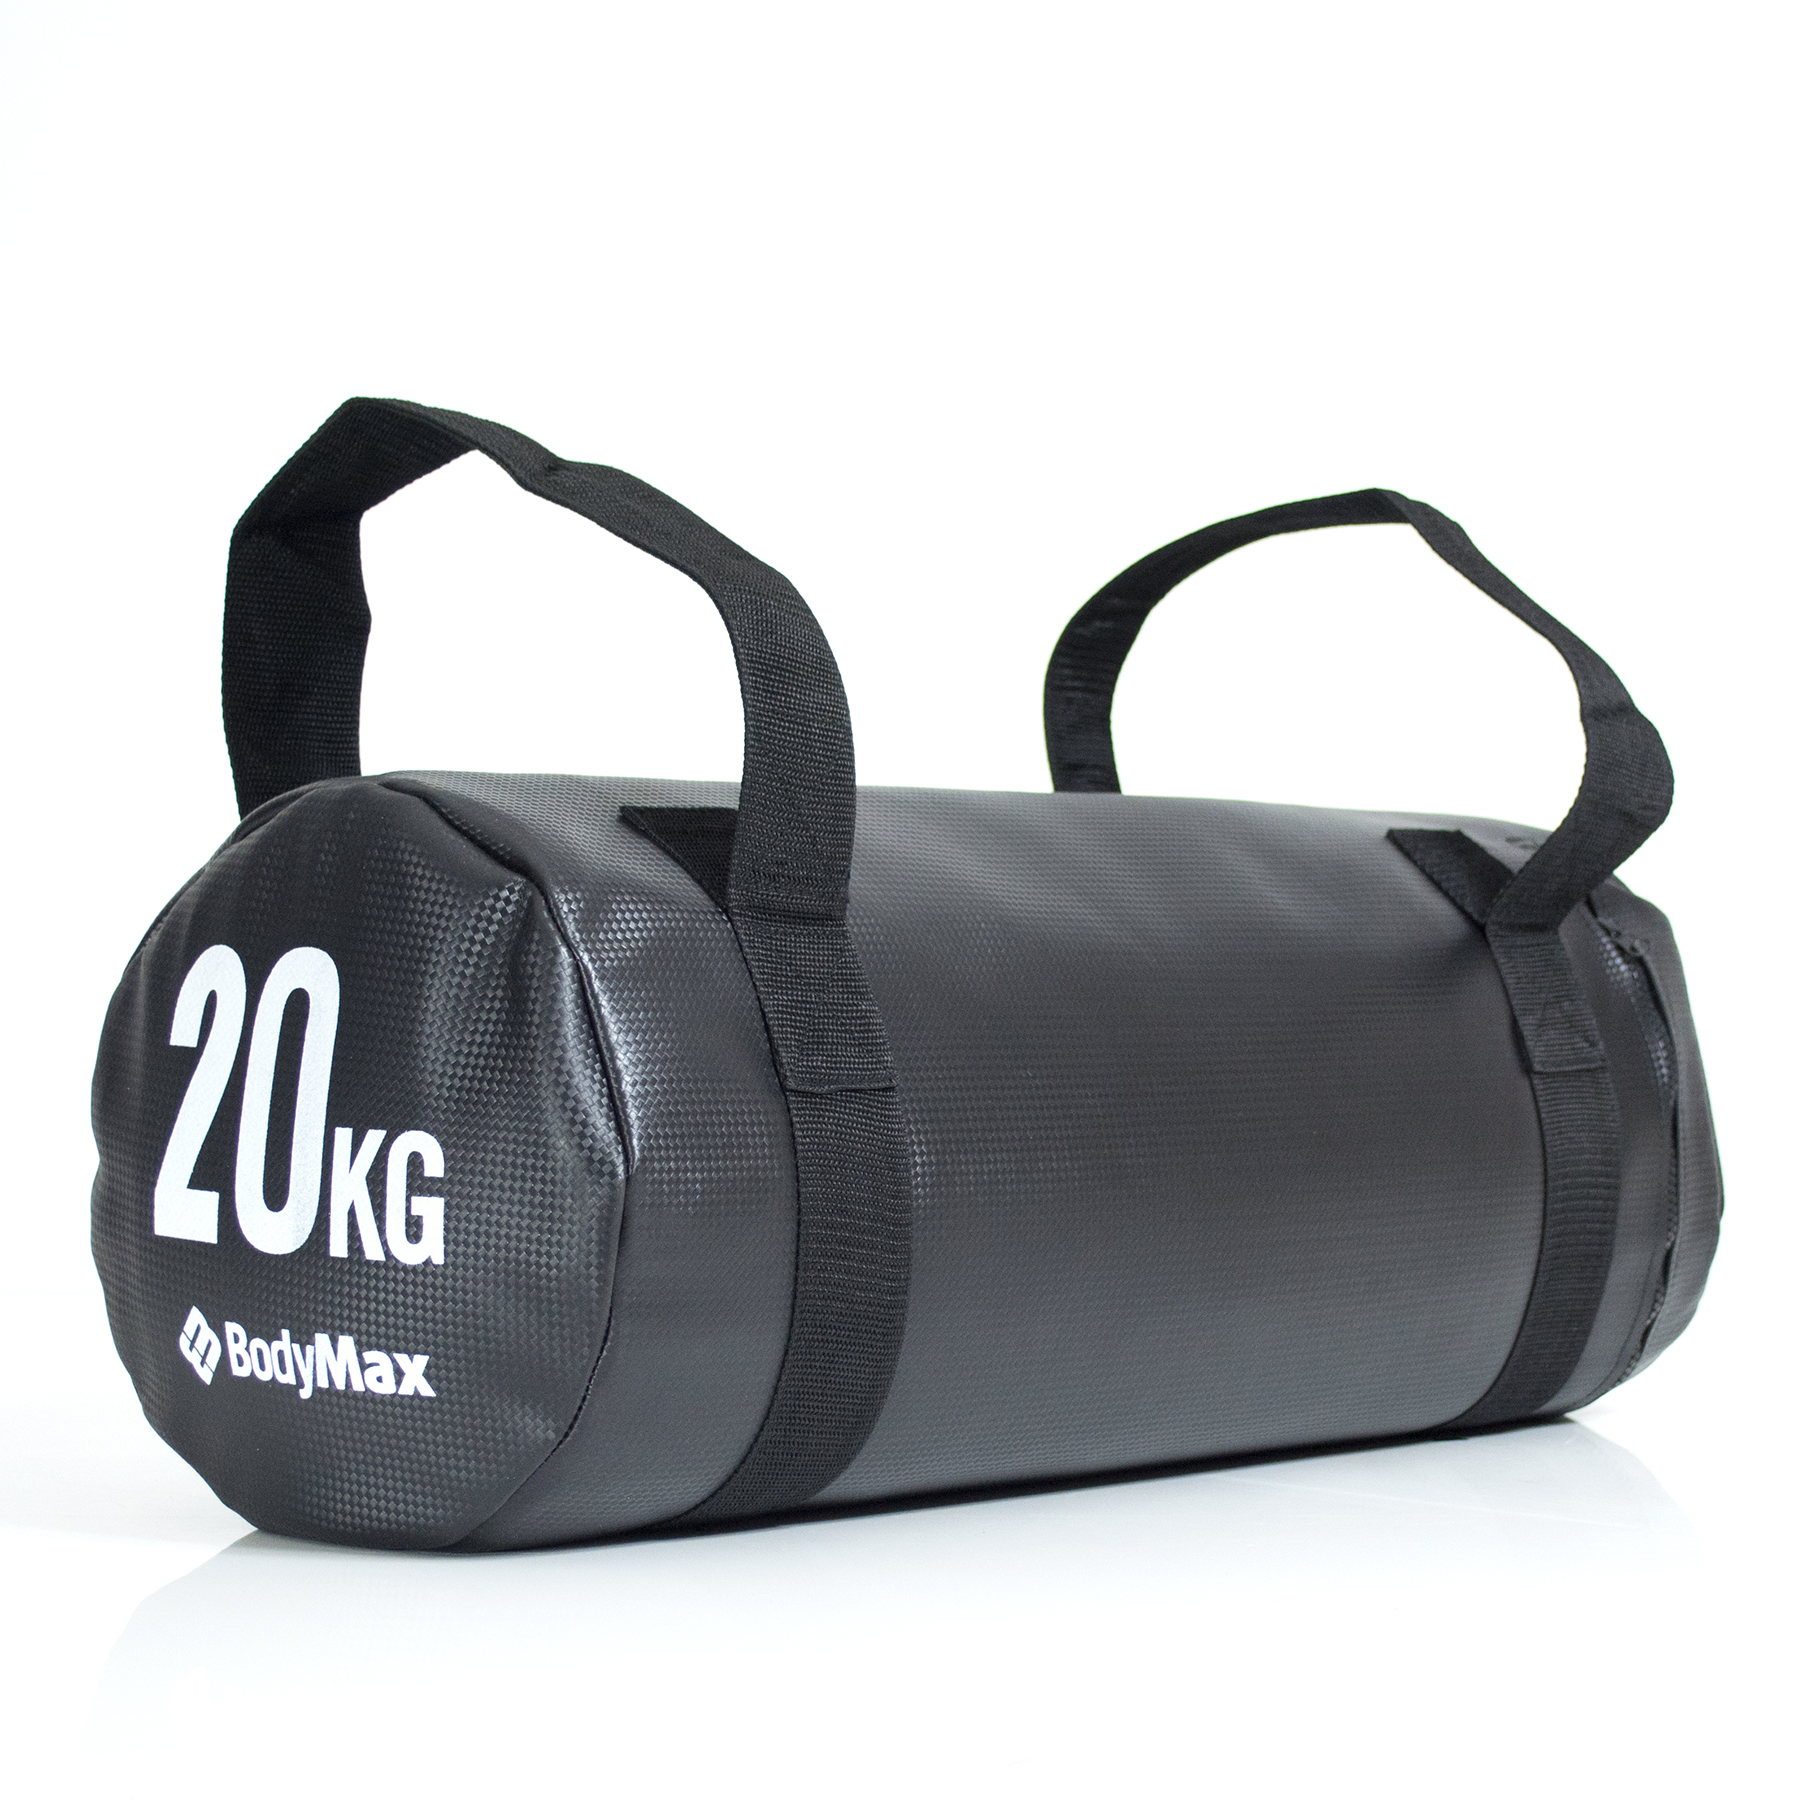 Bodymax 20kg Max Bag Sandbag • West Coast Fitness